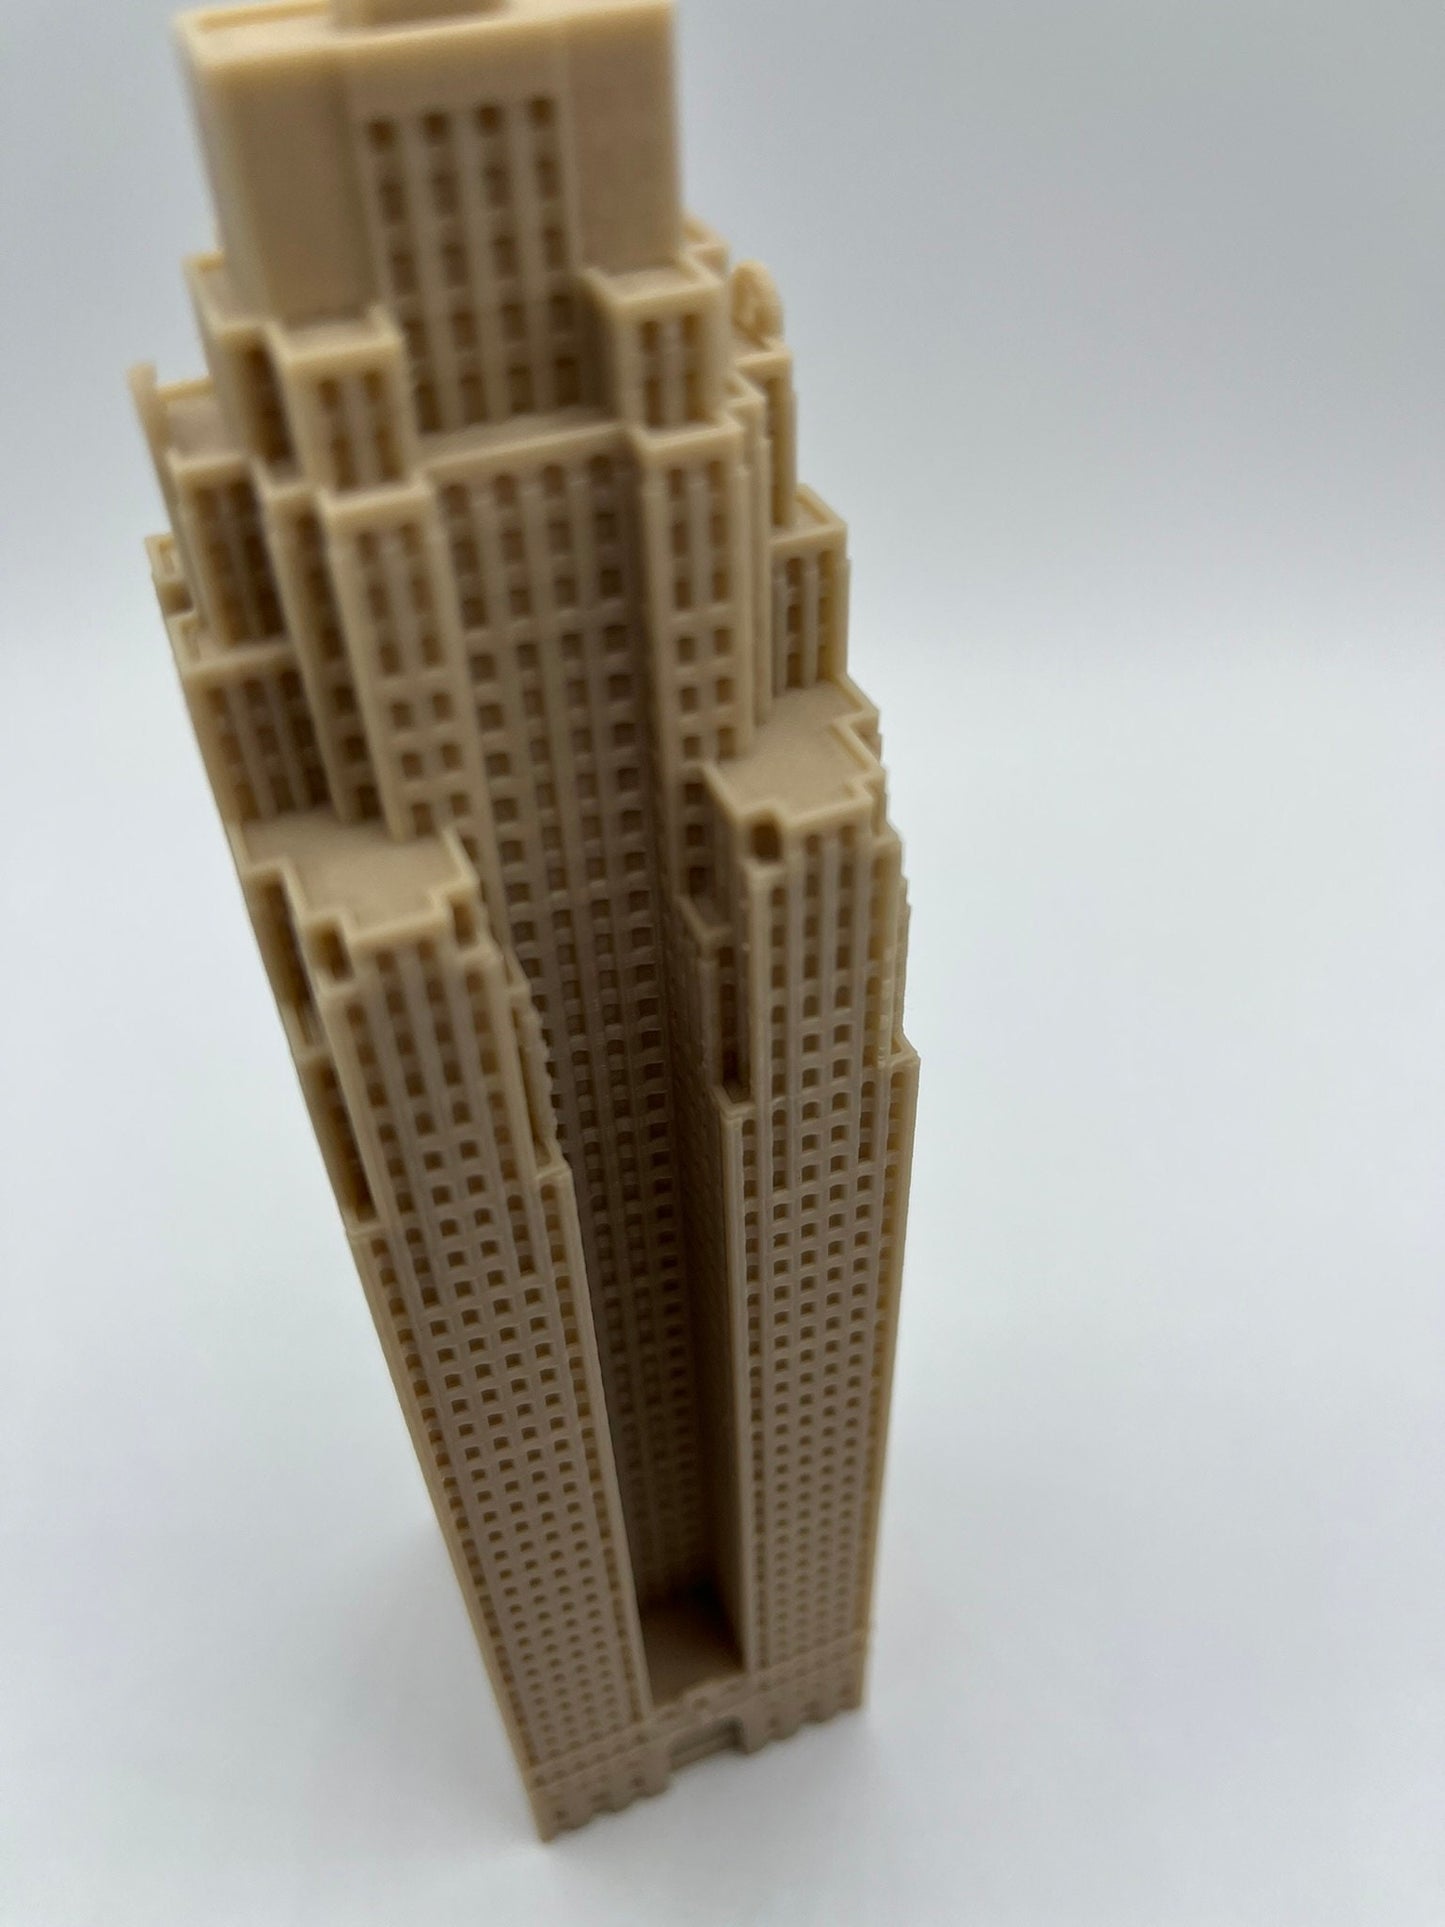 Penobscot Building Model- 3D Printed